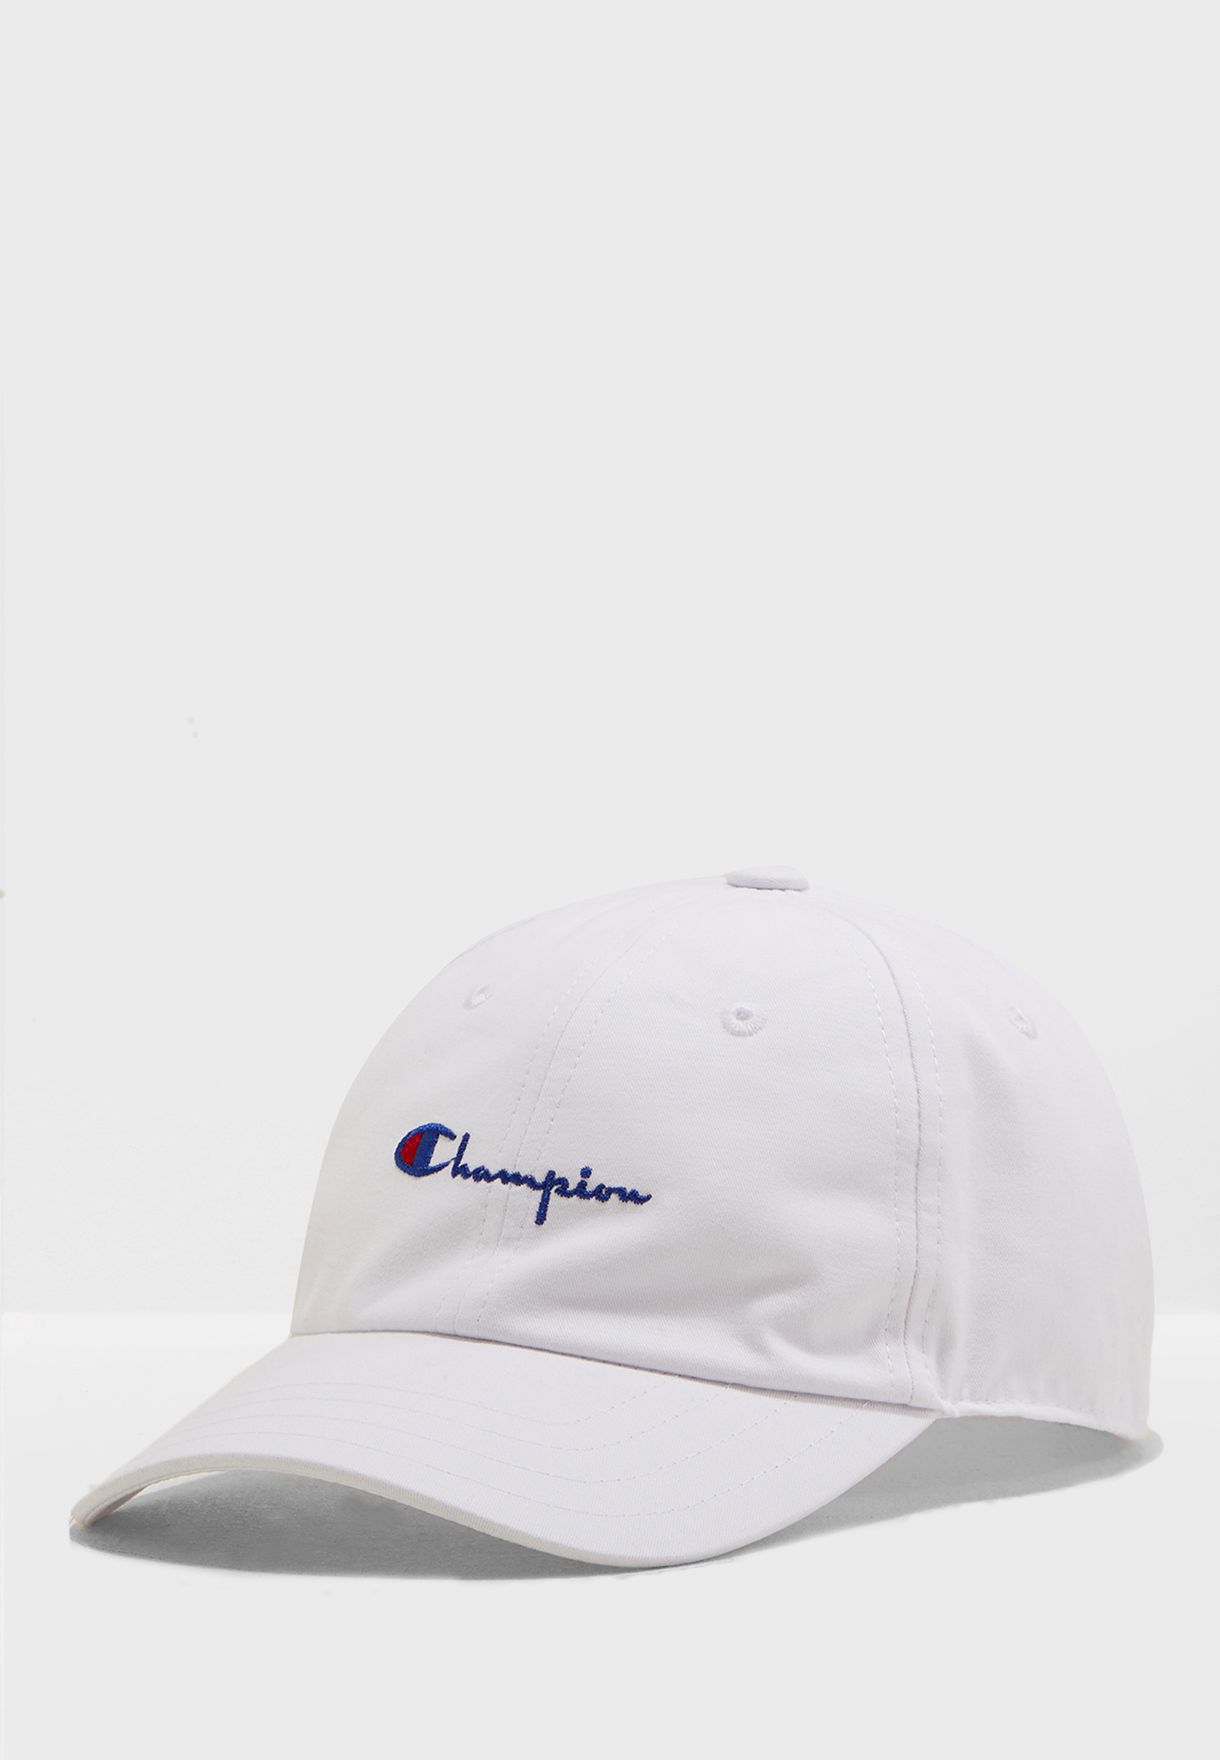 champion white baseball cap